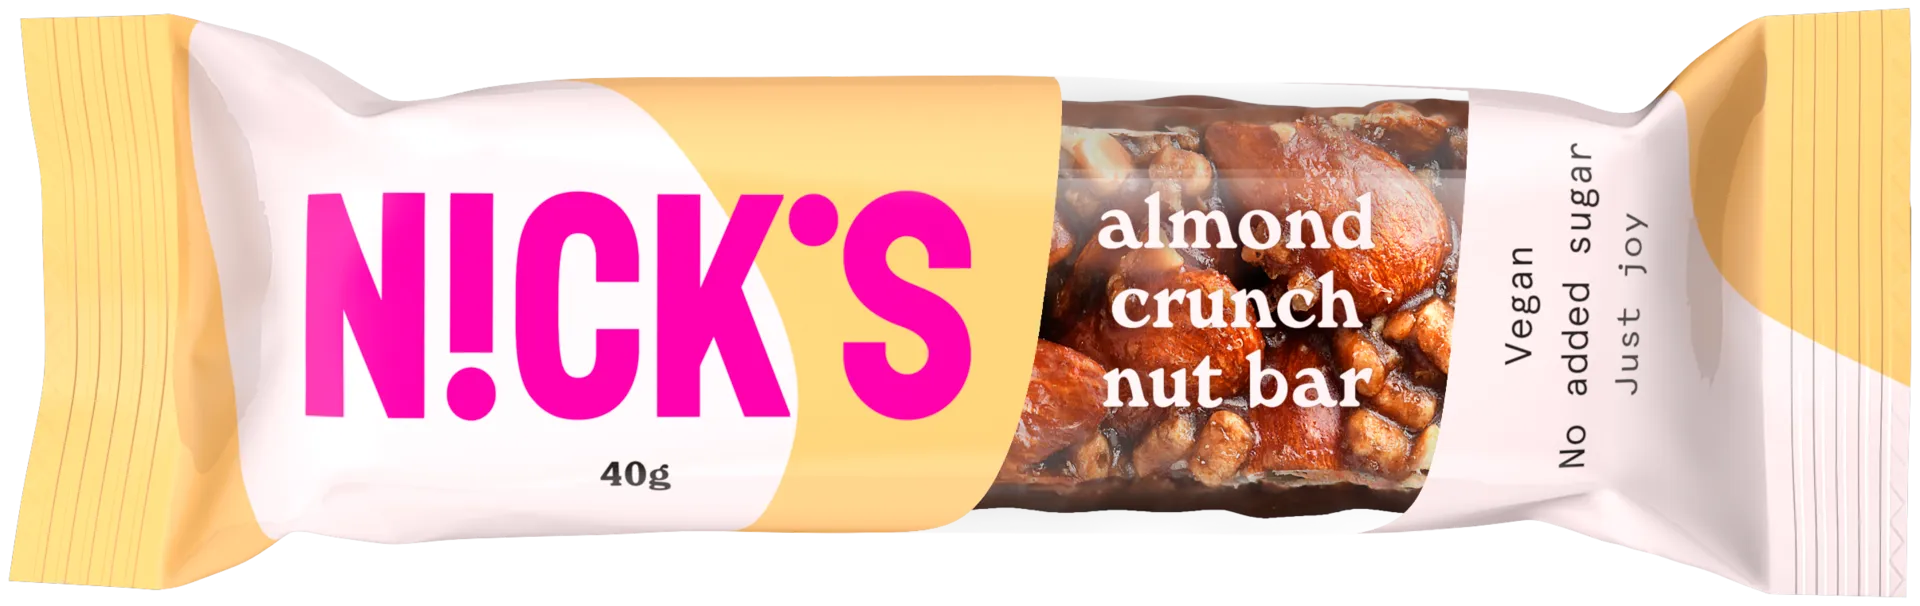 Nick's almond crunch nut bar mantelipatukka 40g